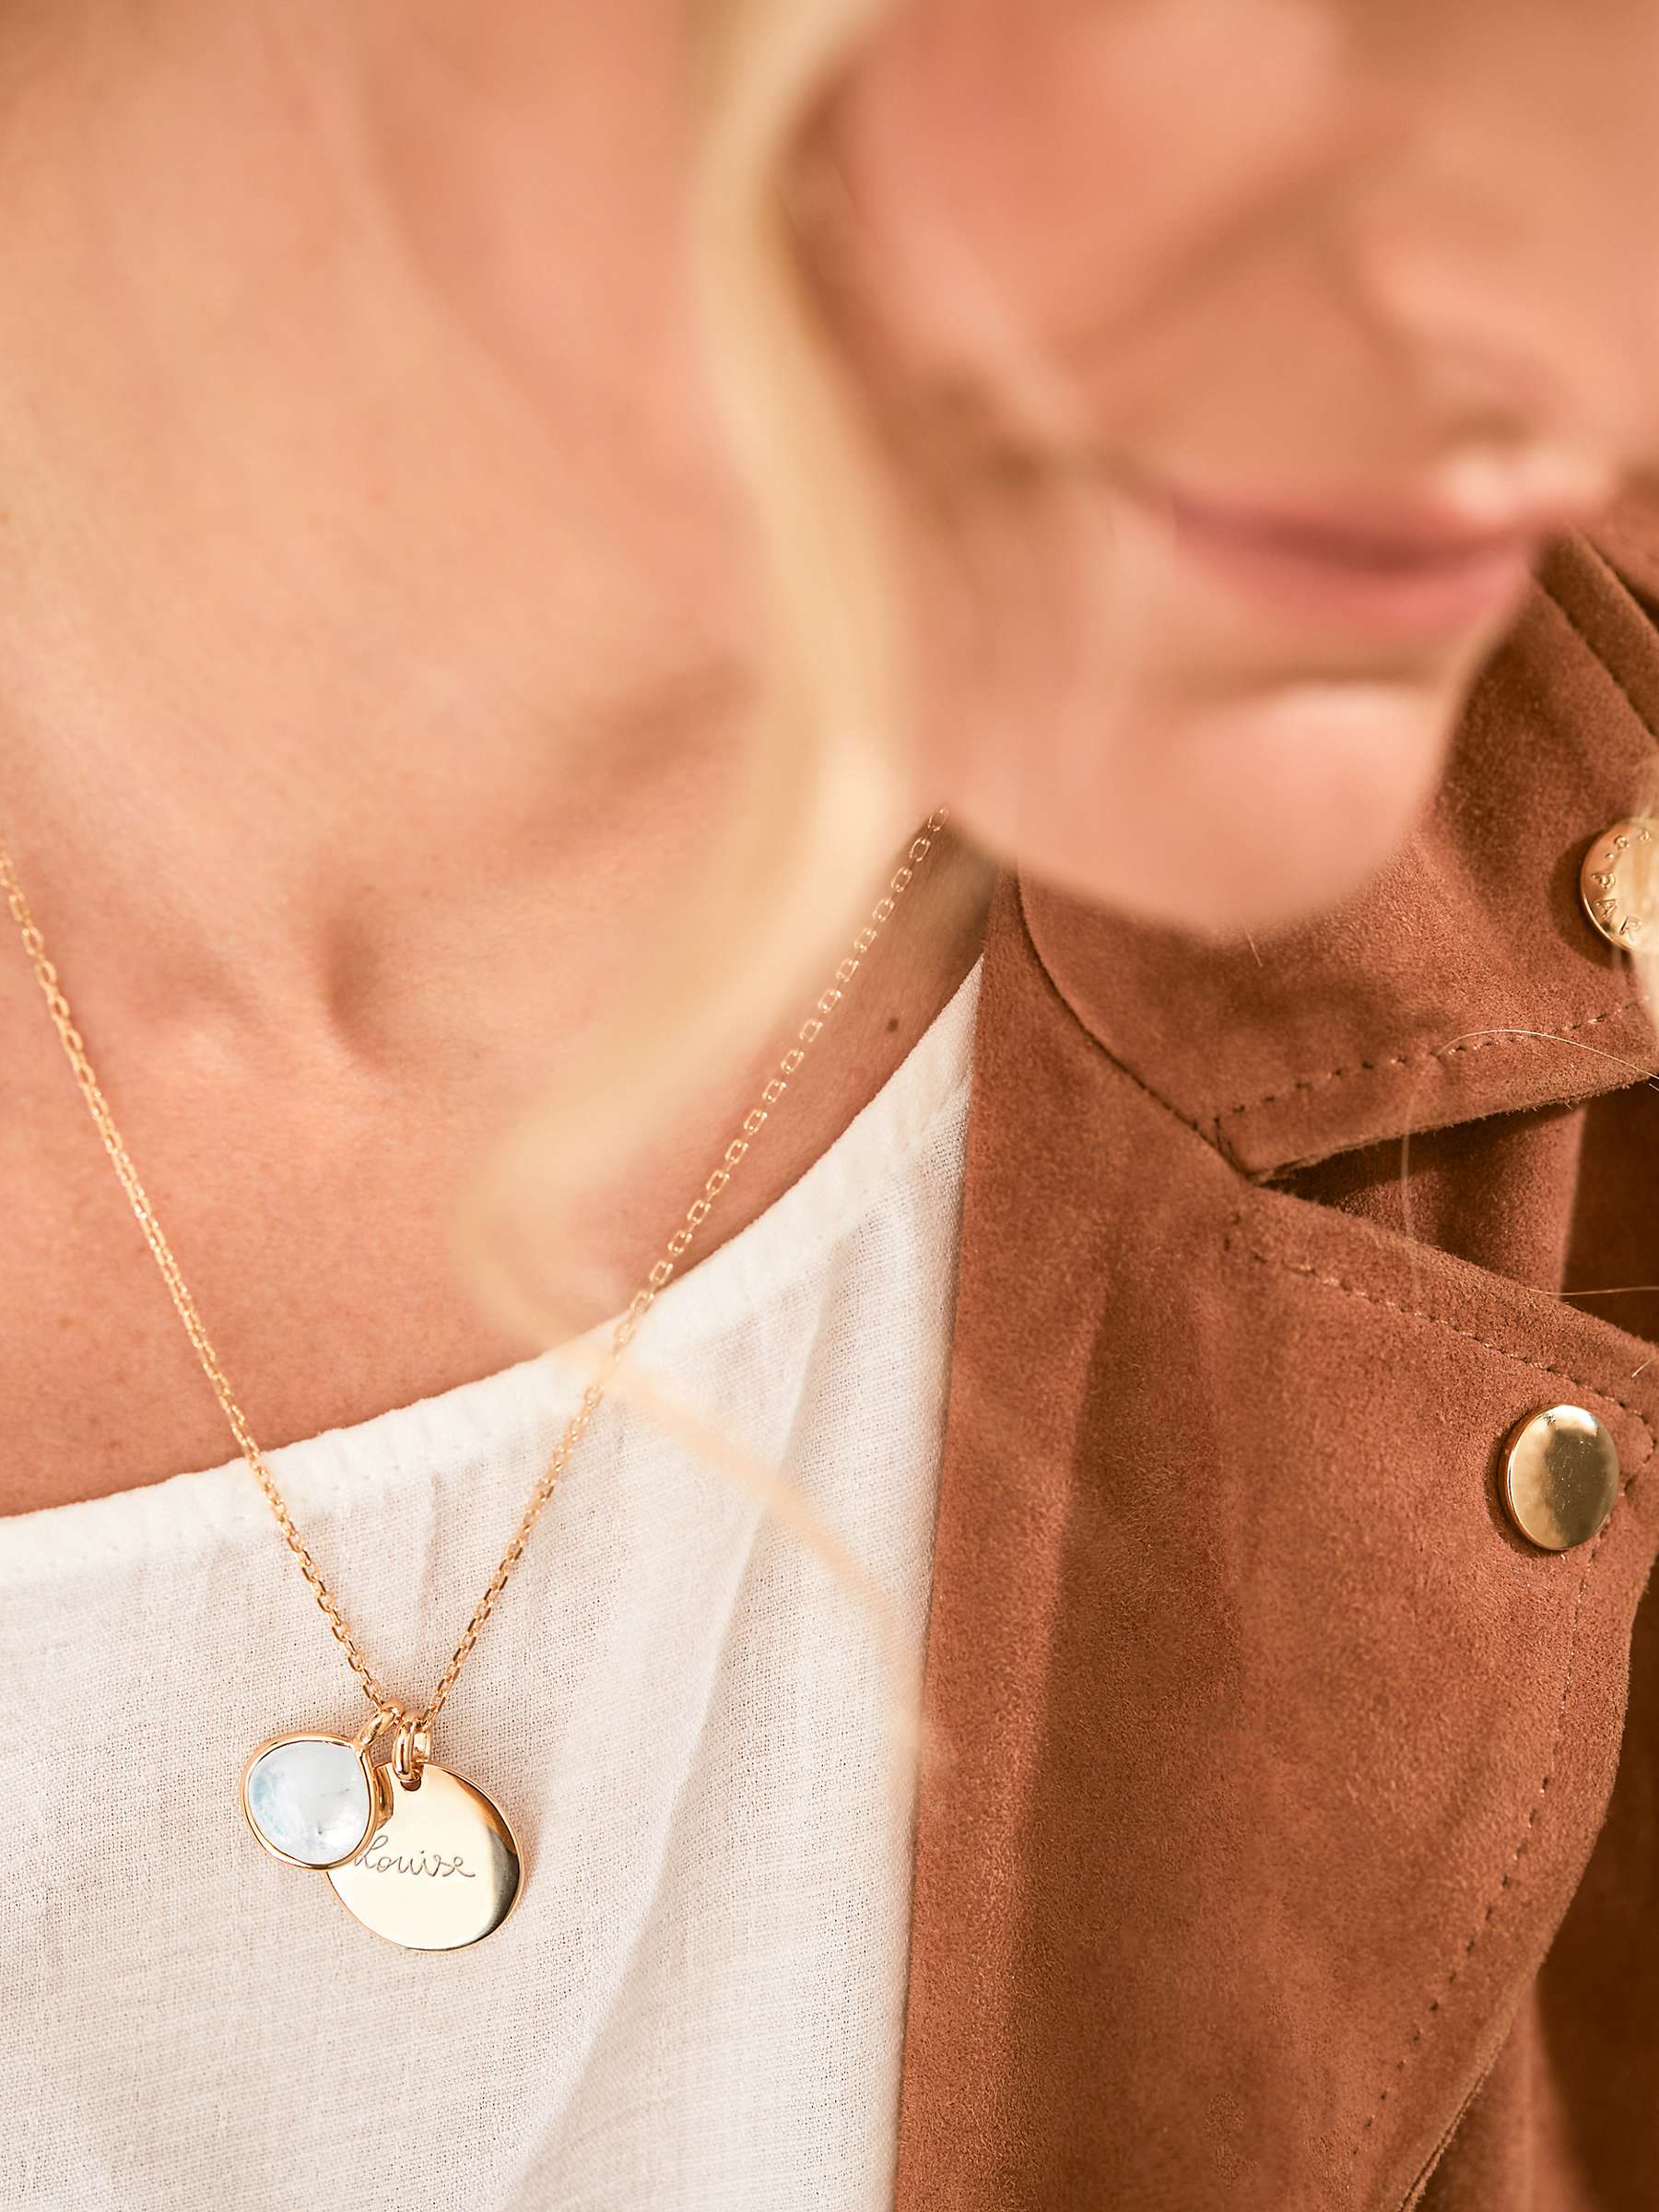 Buy Merci Maman Personalised Moonstone Gemstone Necklace, Gold Online at johnlewis.com